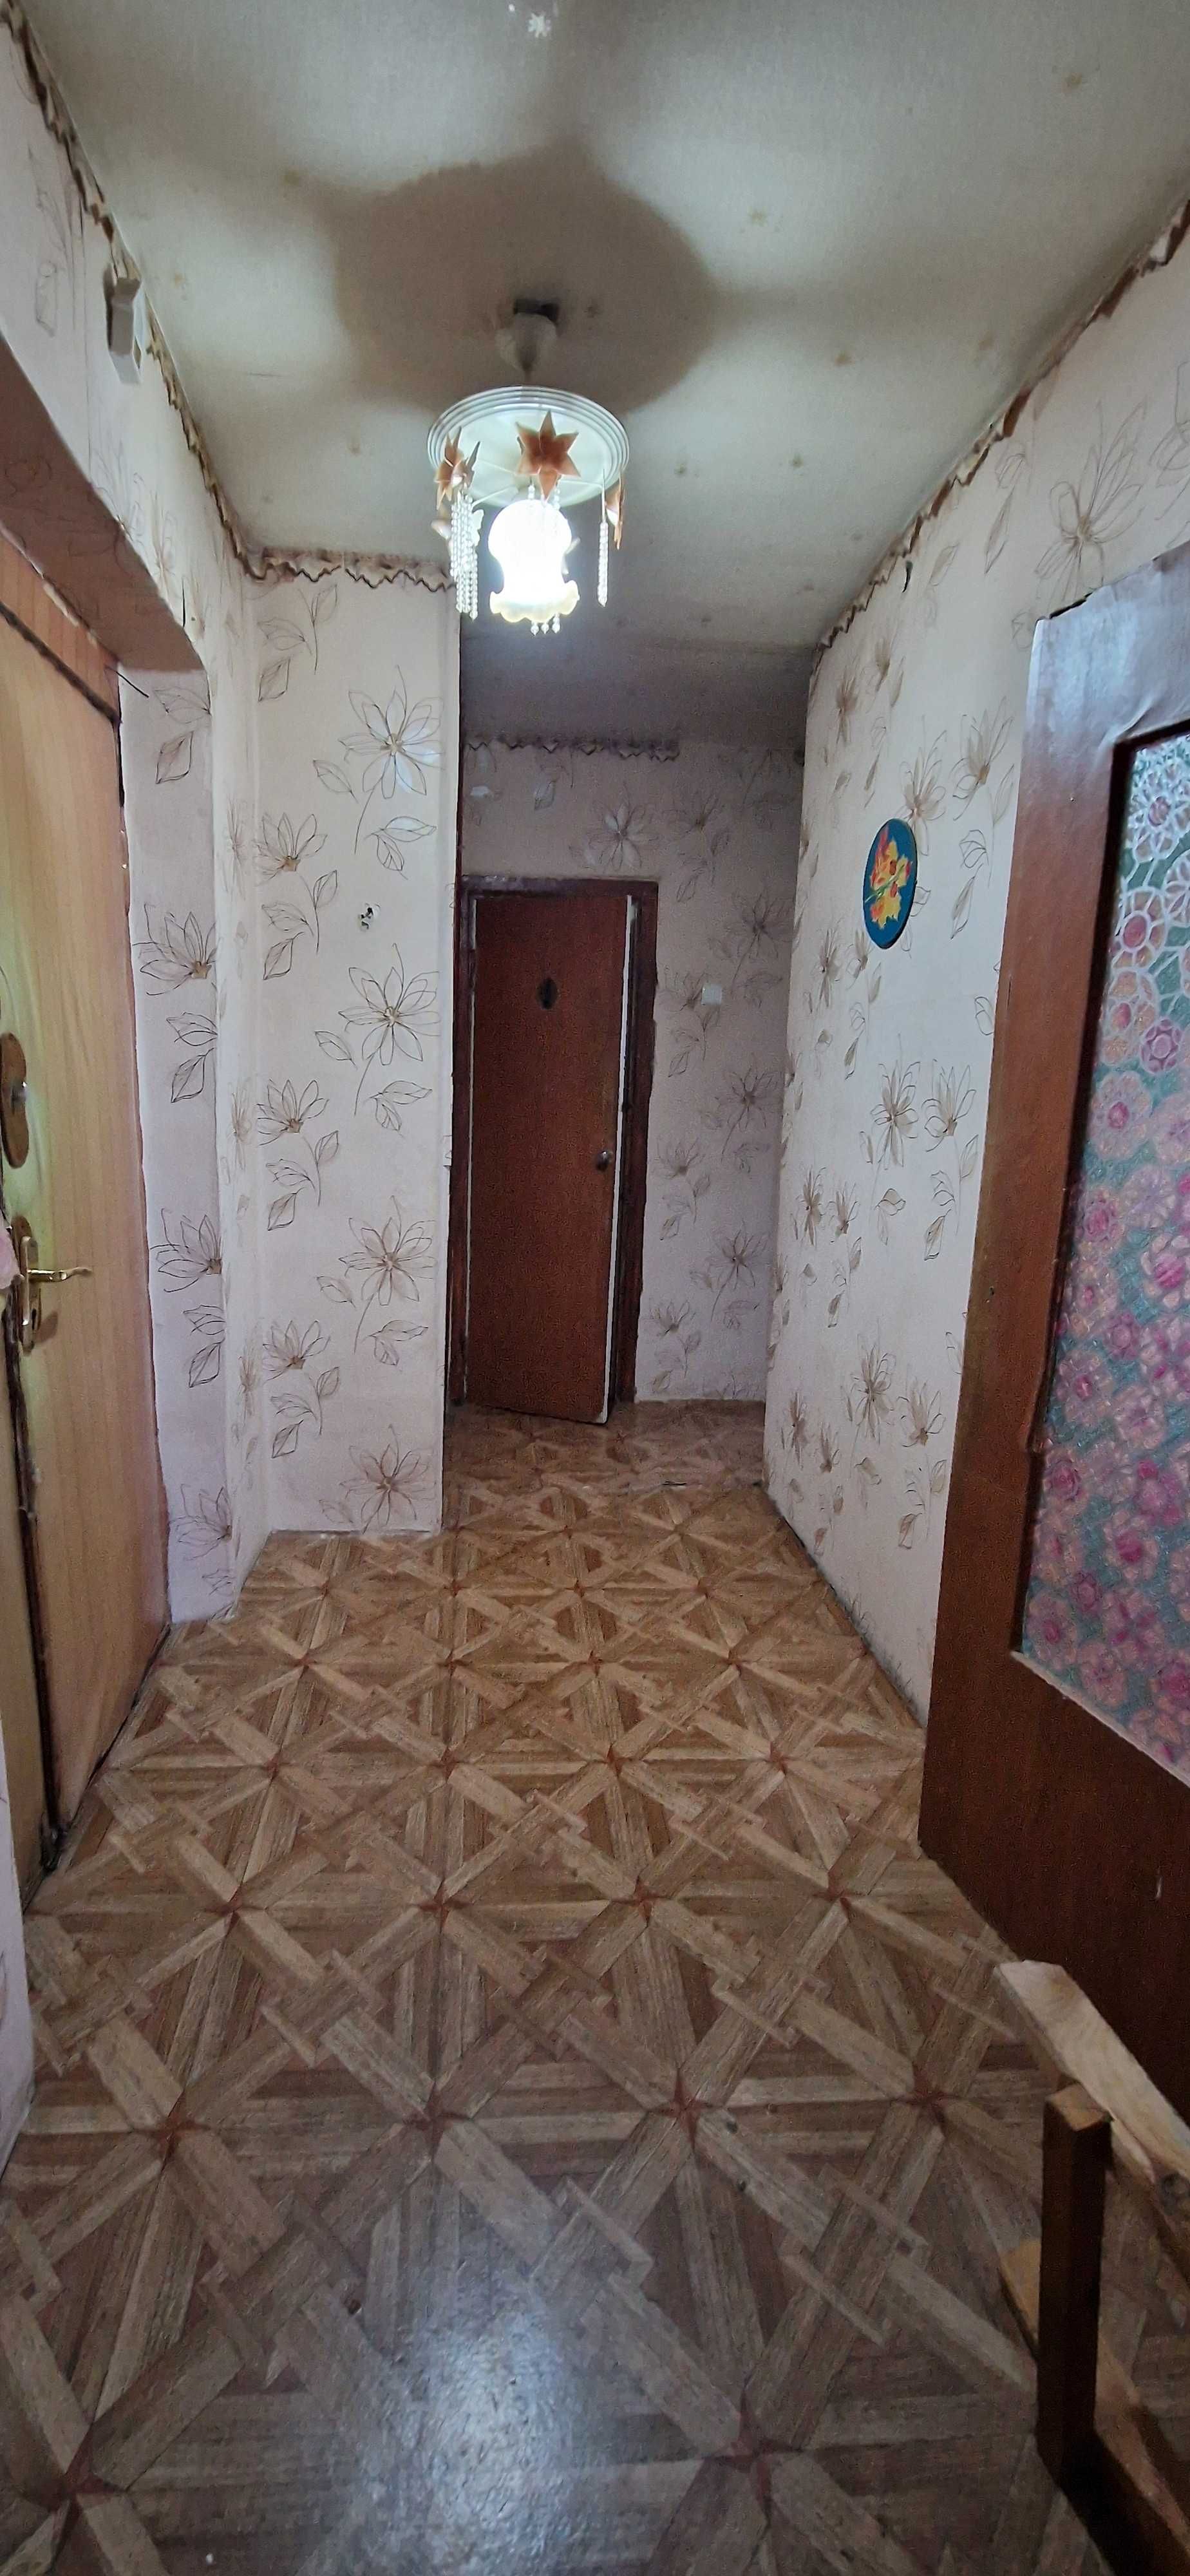 2 кімнатна квартира в м. Сновськ